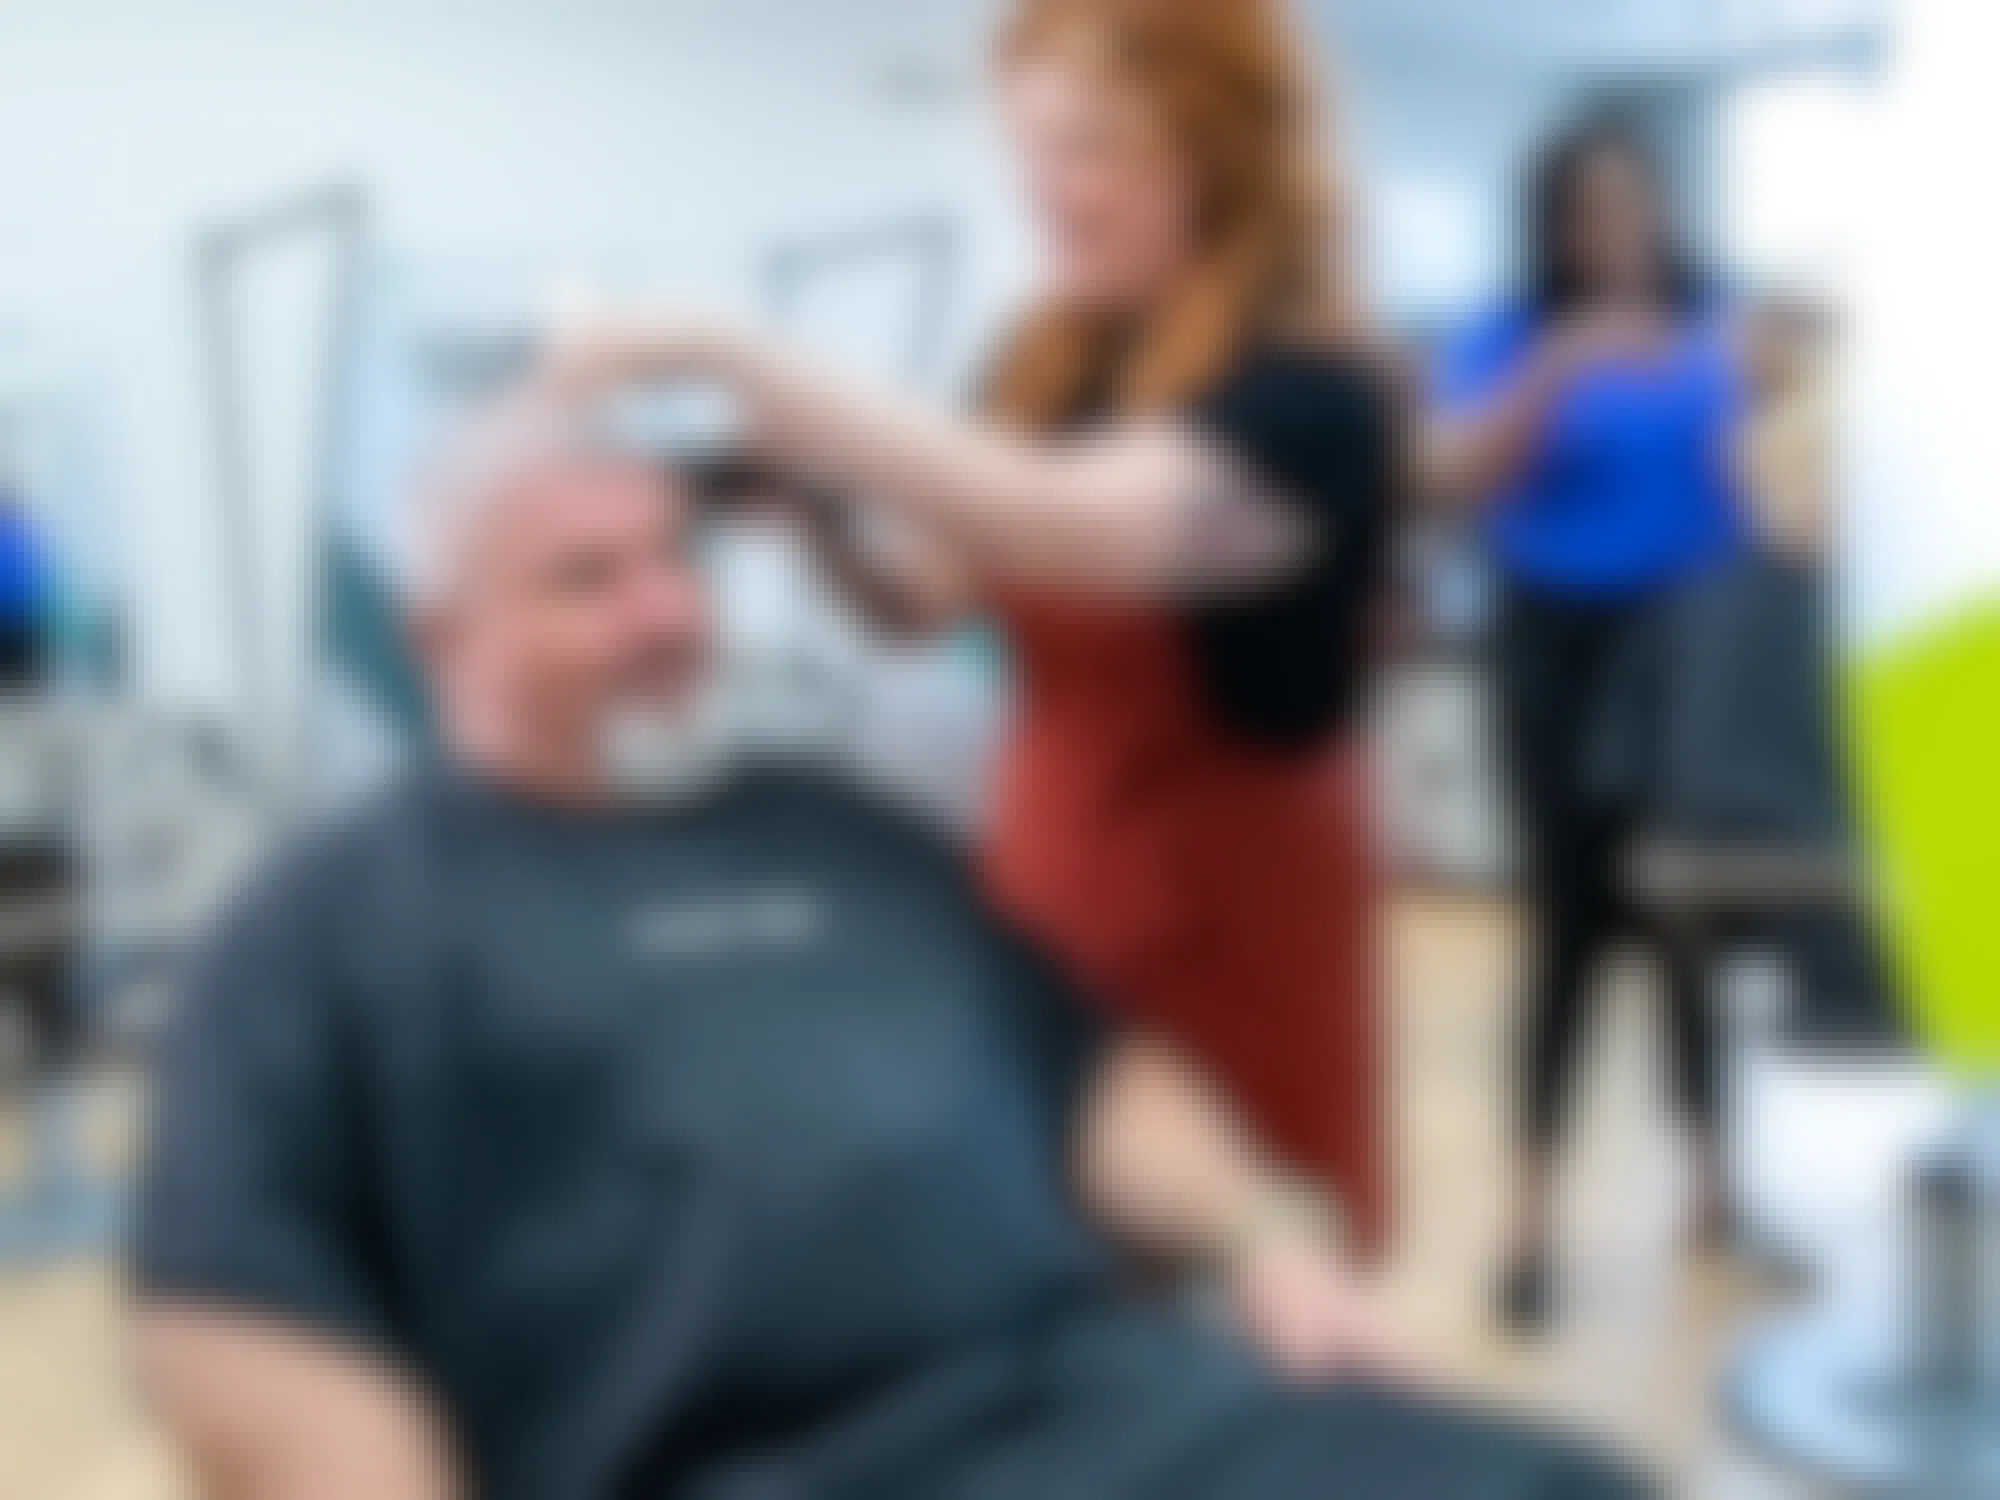 A Great Clips stylist cutting a man's hair